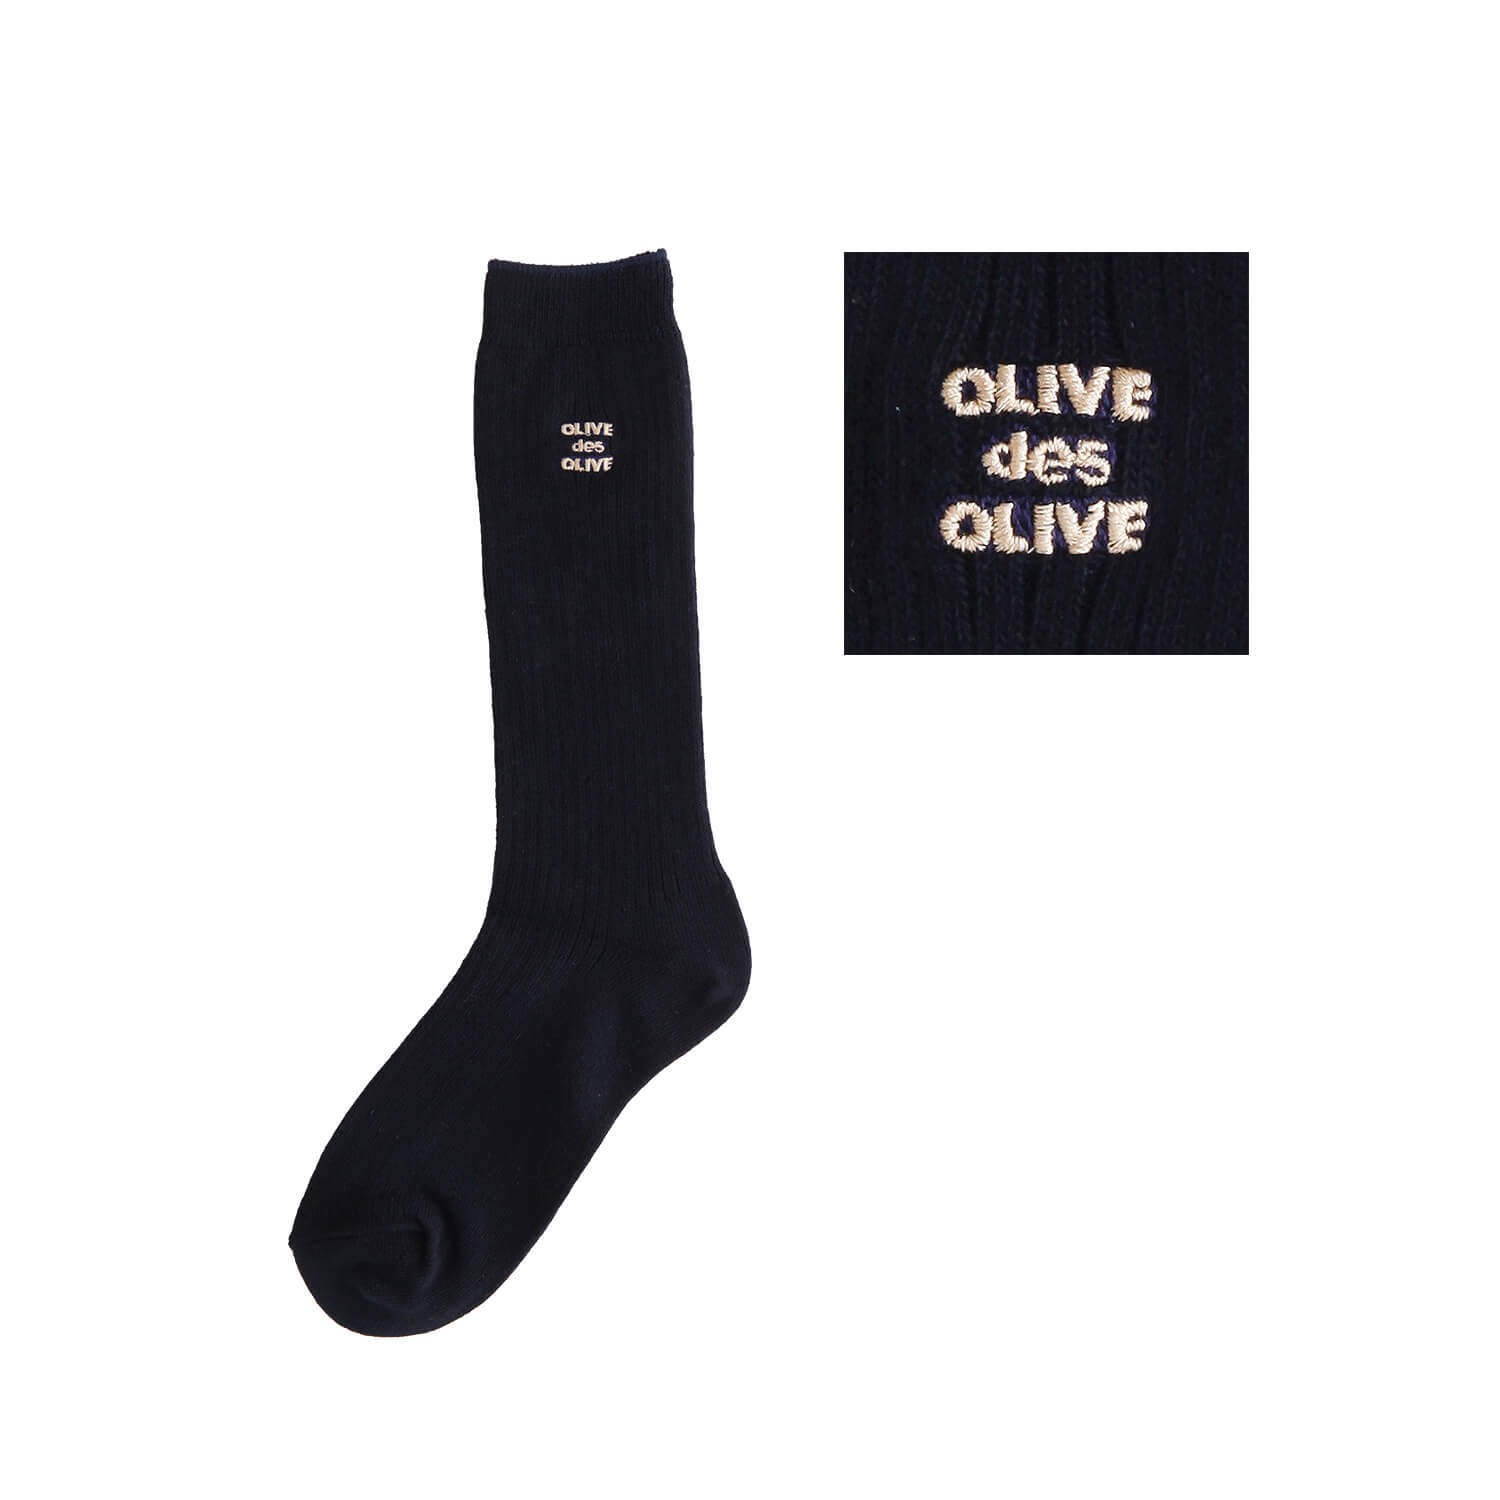 OLIVE des OLIVEのポップなロゴ刺繍入りのレギュラーソックス。刺繍カラー-28ベージュ